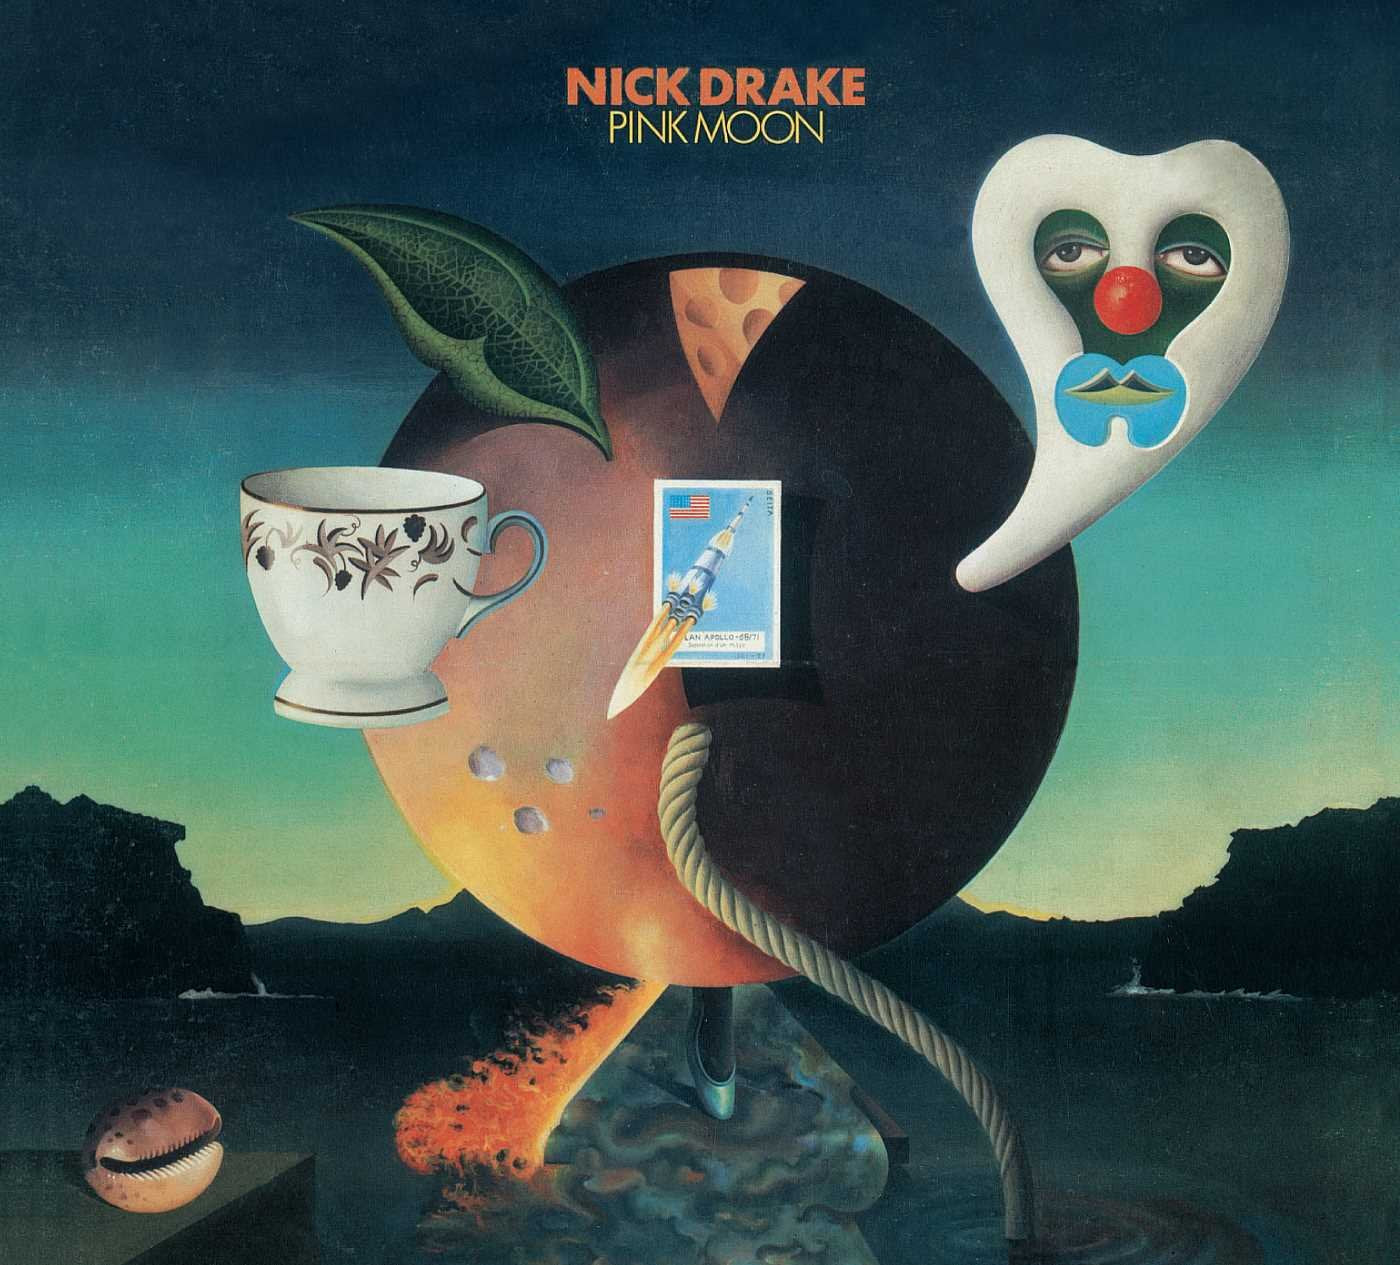 Drake, Nick - Pink Moon (2004 digipak reissue) - CD - New